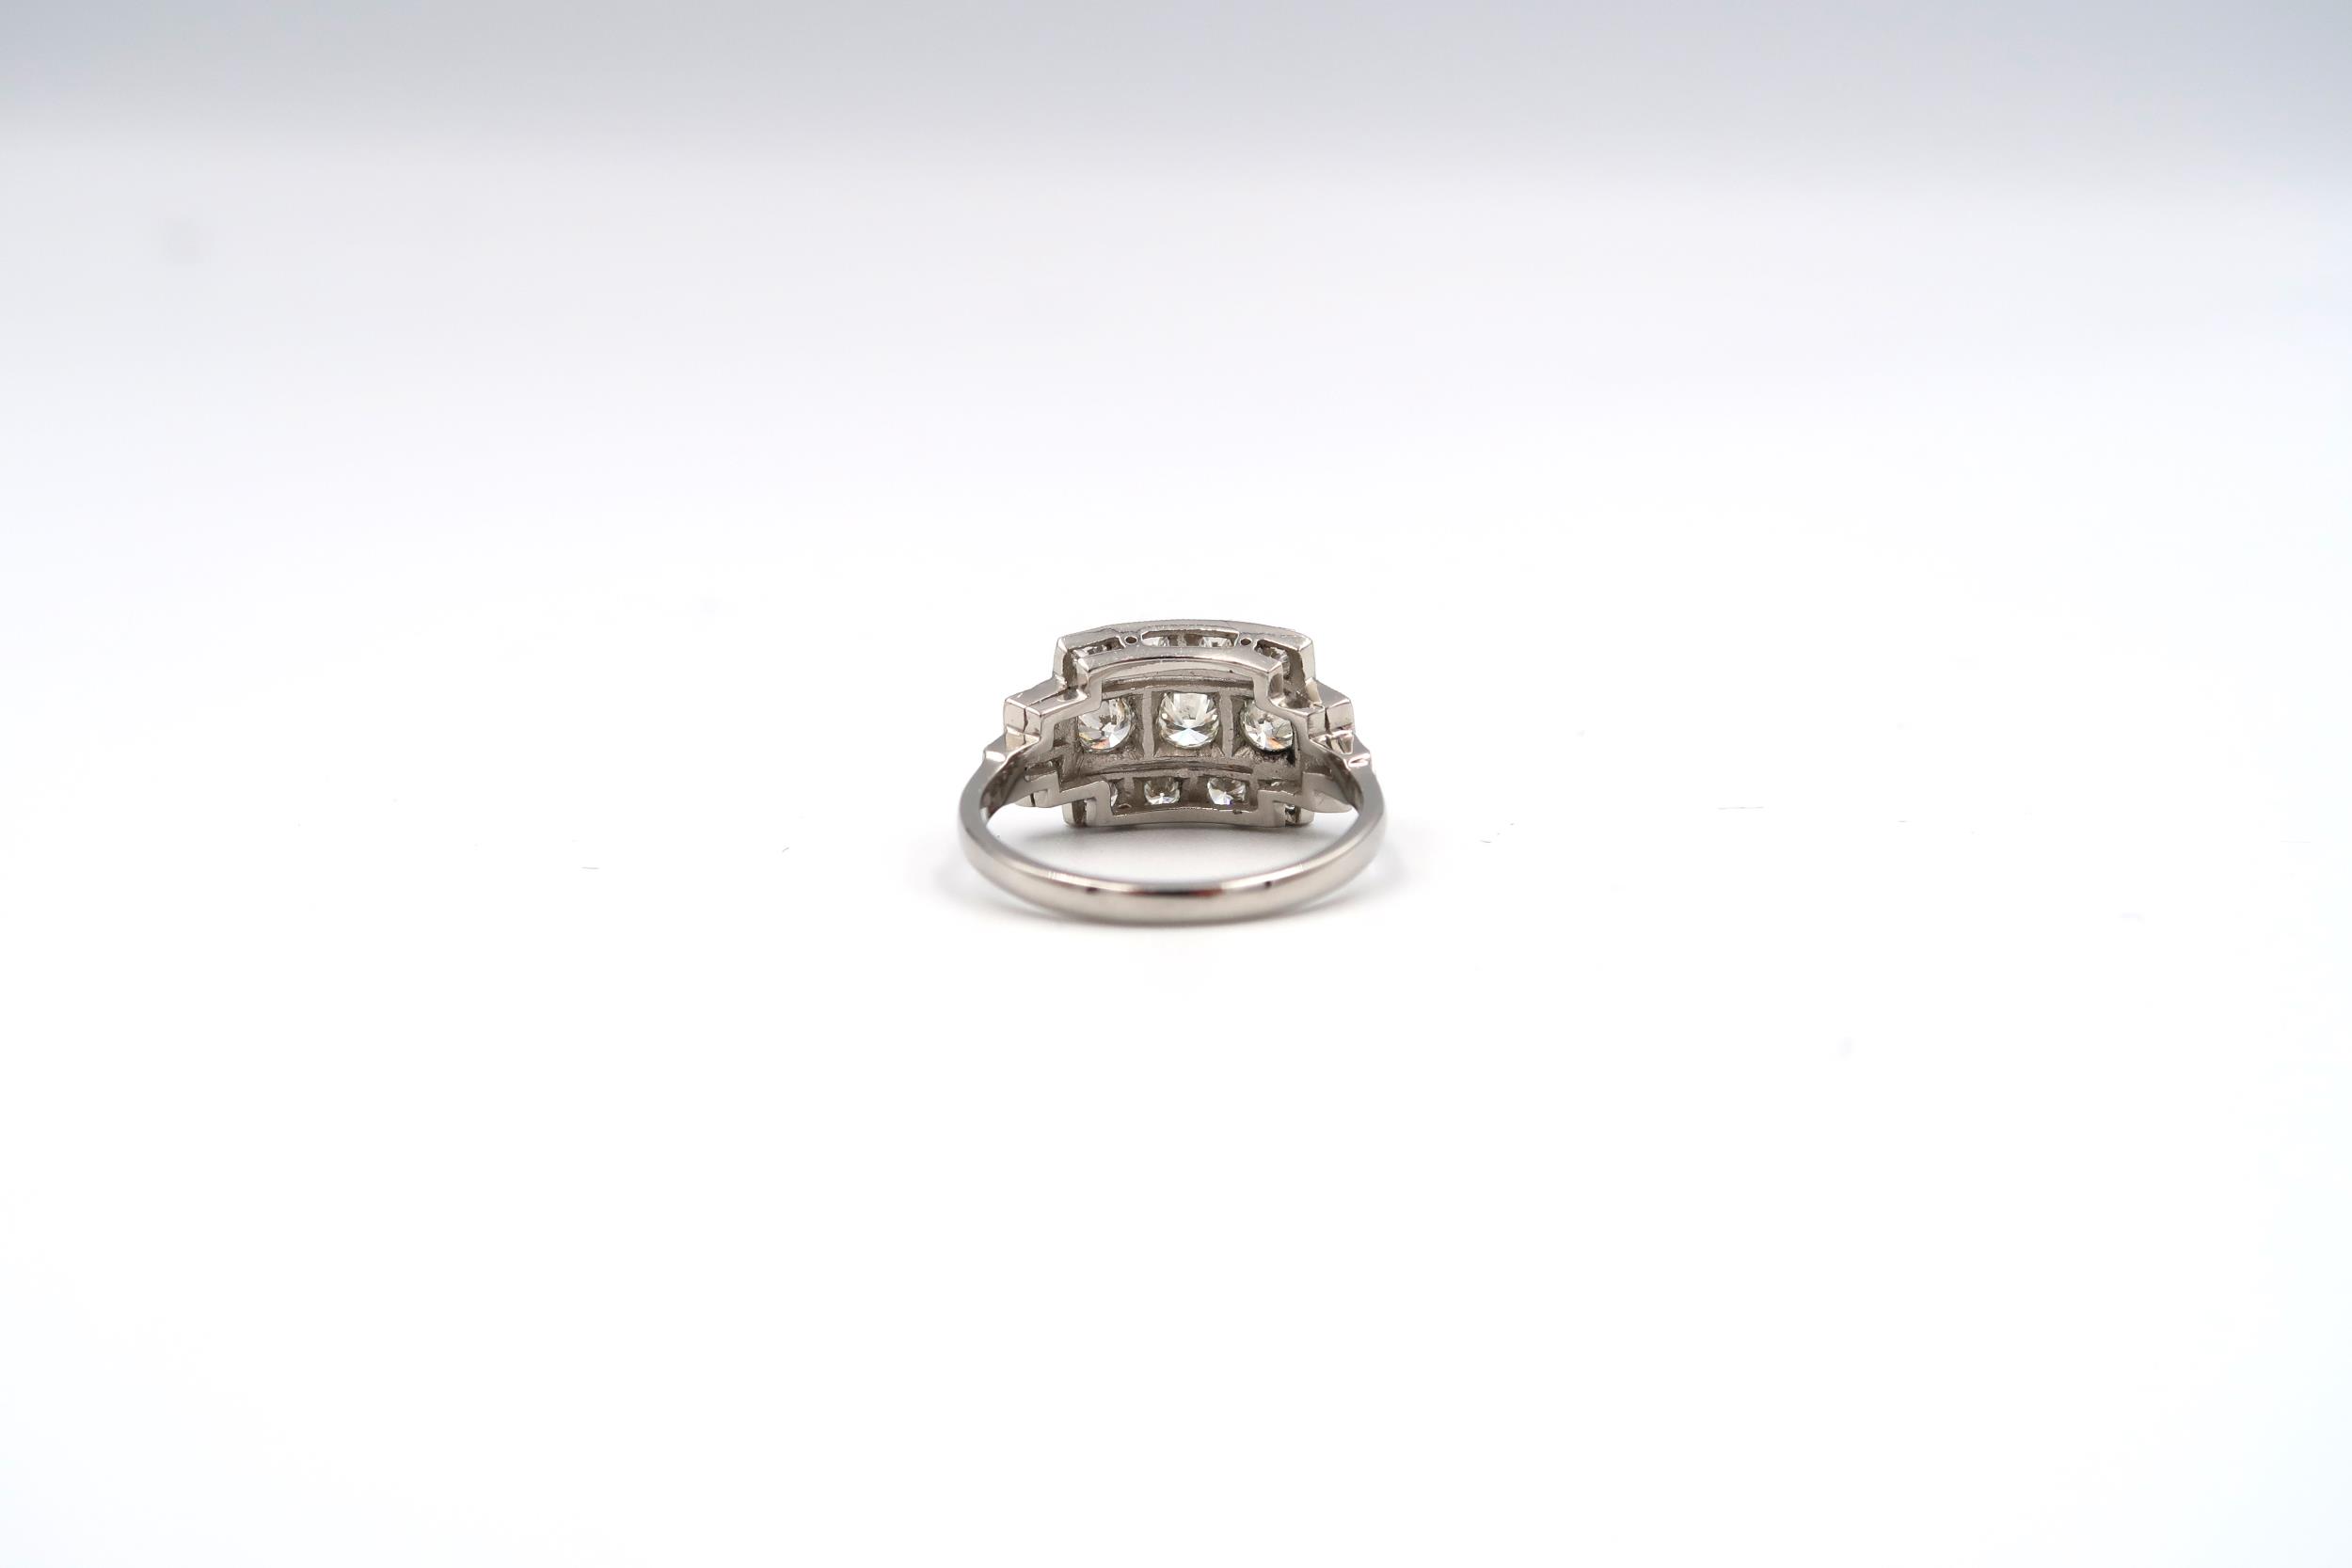 An Art Deco style platinum three row diamond ring with diamond shoulders - diamond weight approx 1. - Image 3 of 3